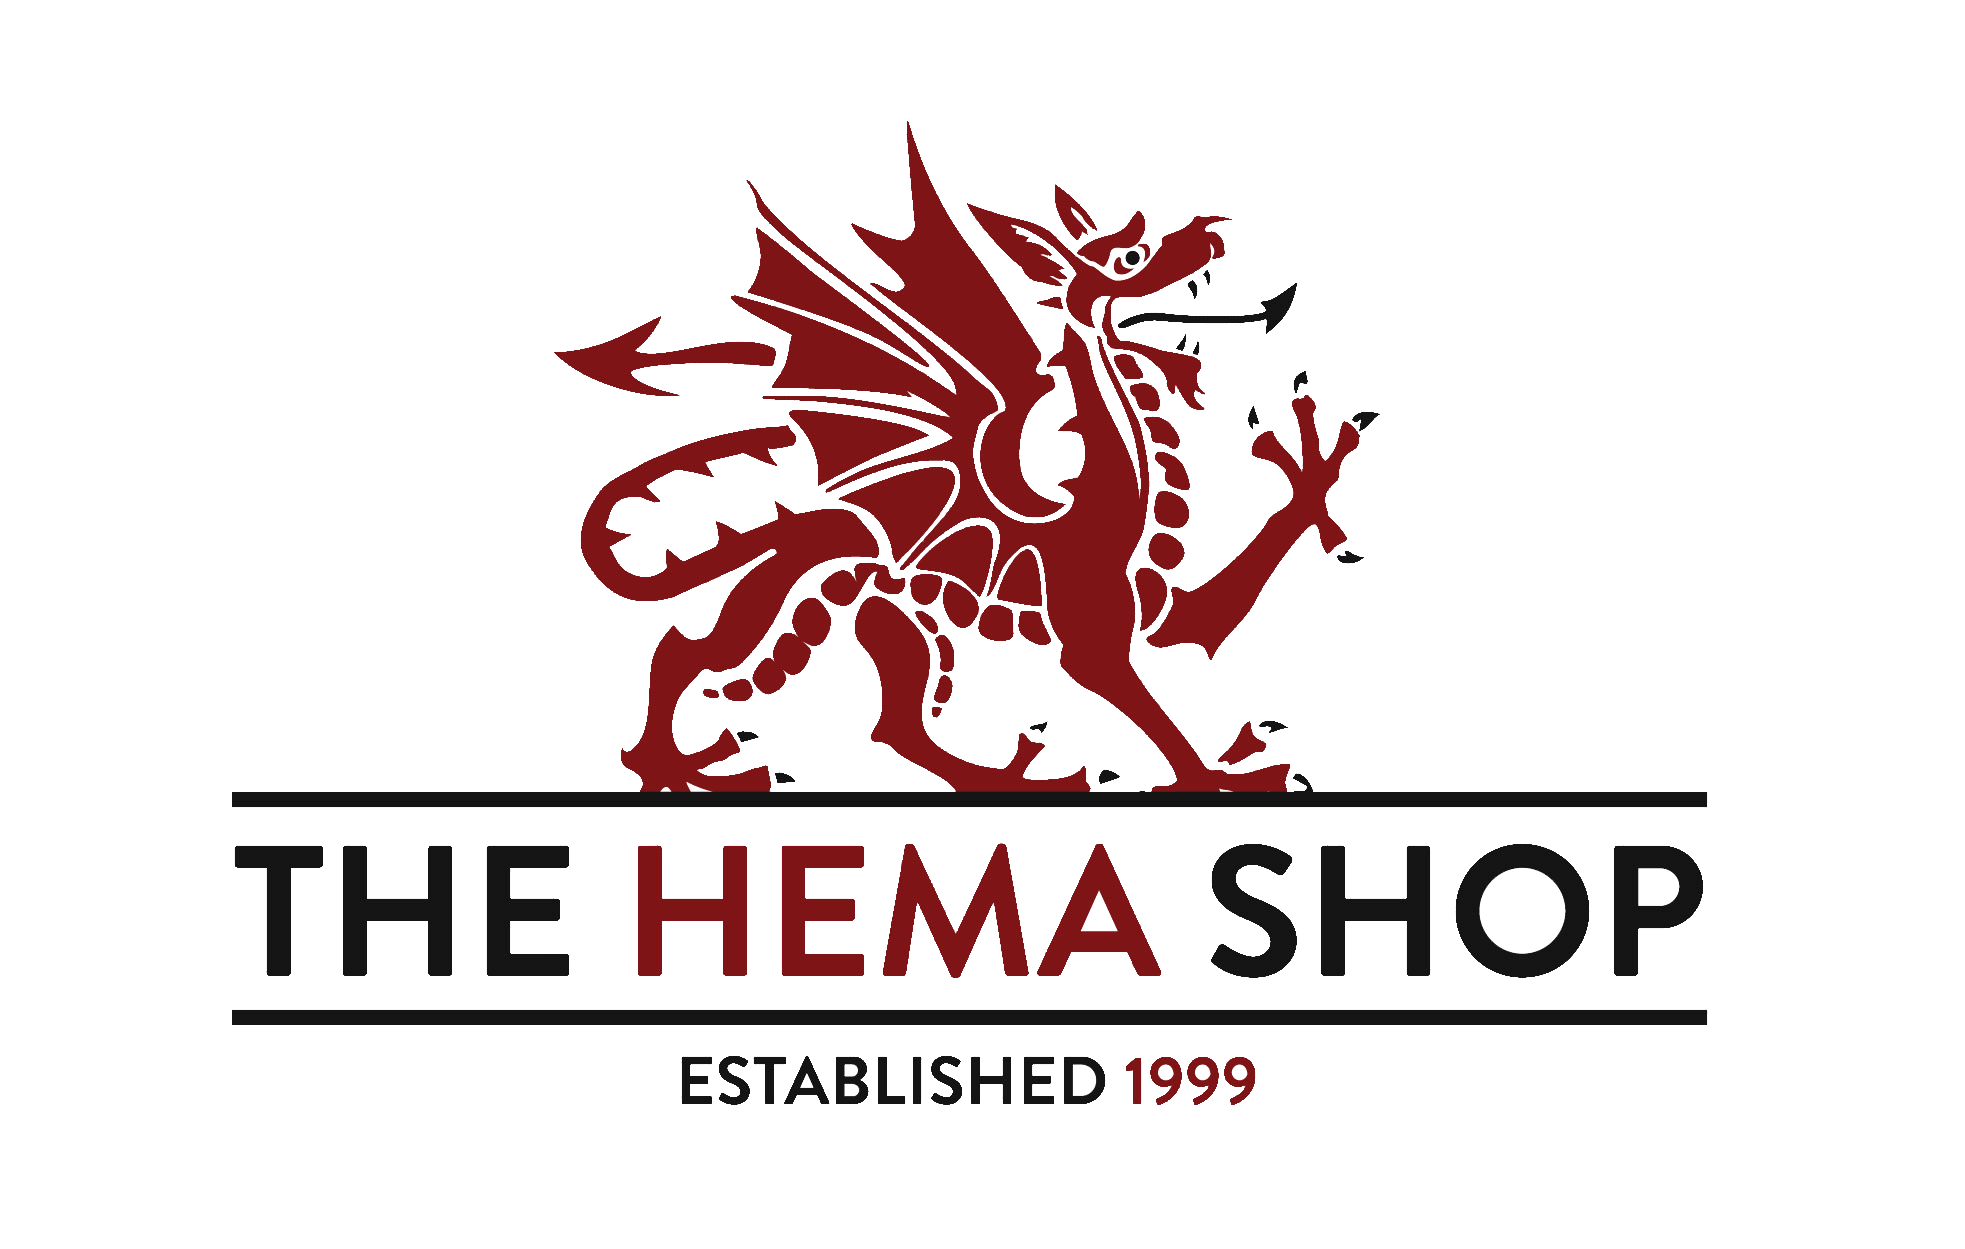 The HEMA Shop